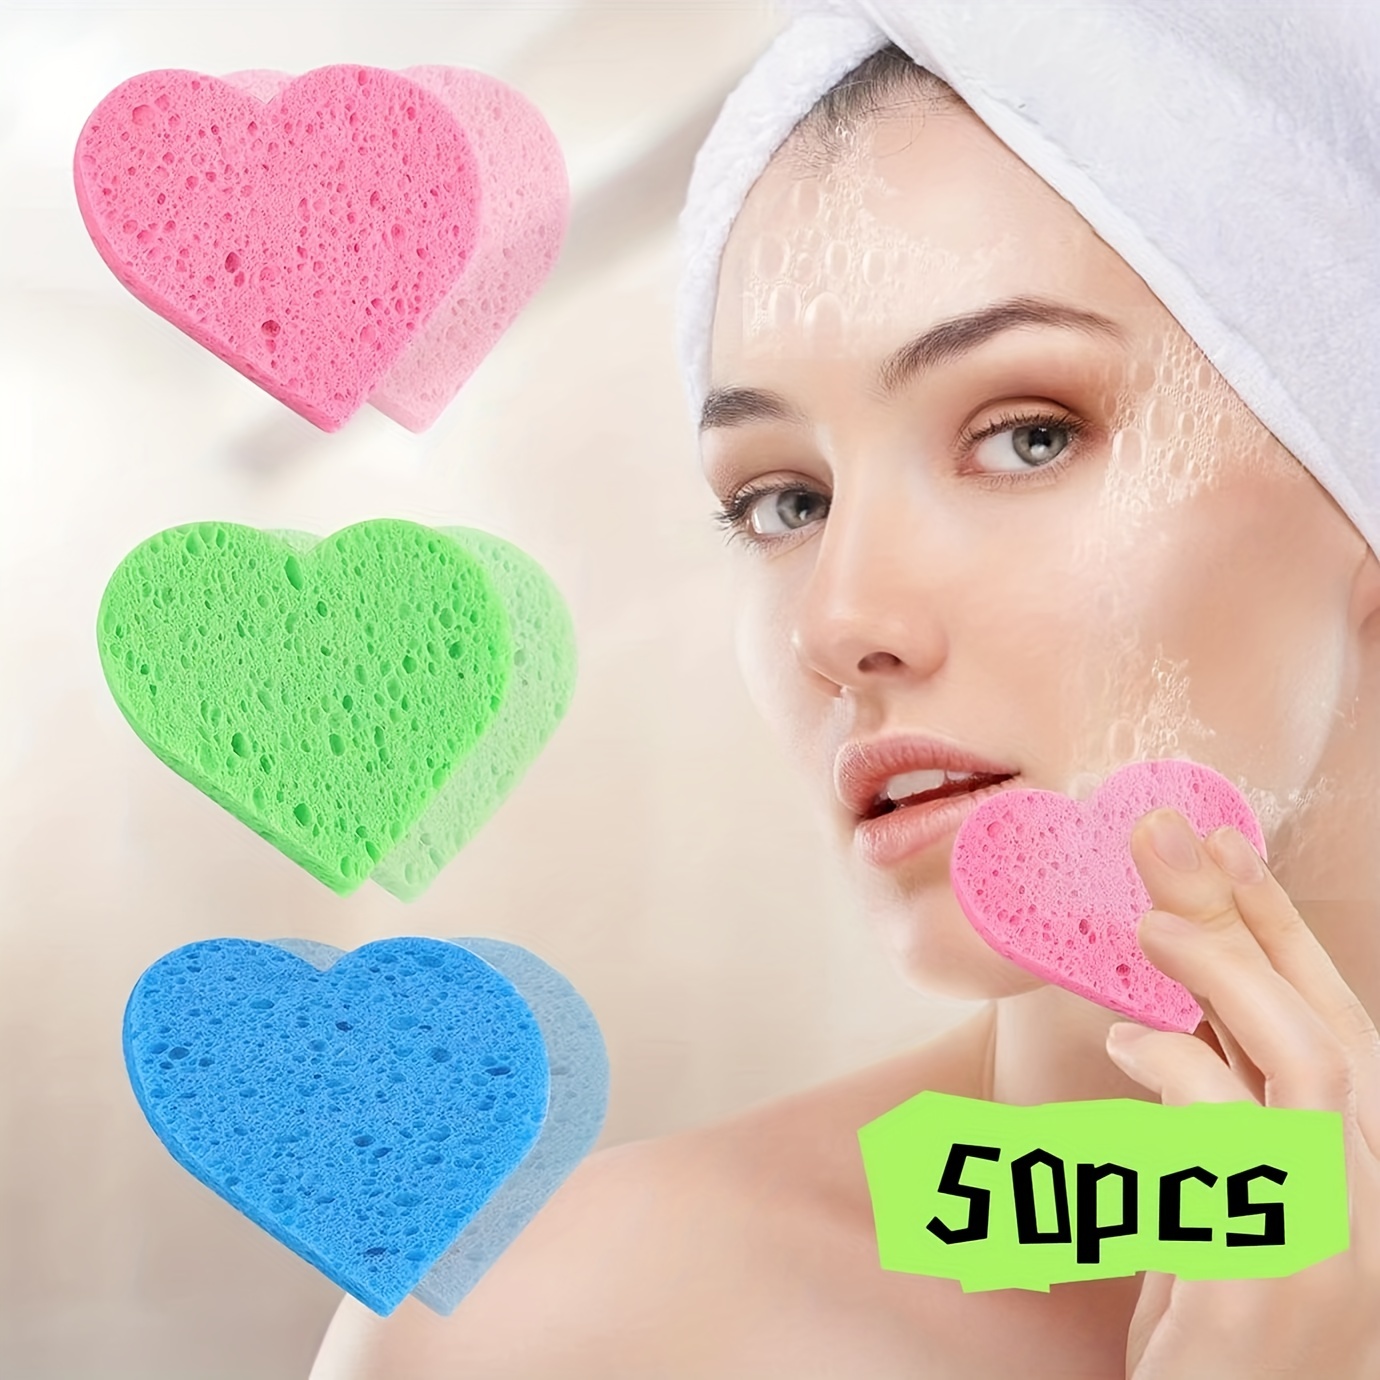 50-Count Facial Sponges - Loeictam Reusable Heart Compressed Facial Sponges  100% Natural Cellulose Face Sponge for Facial Cleansing Exfoliating Makeup  Removal